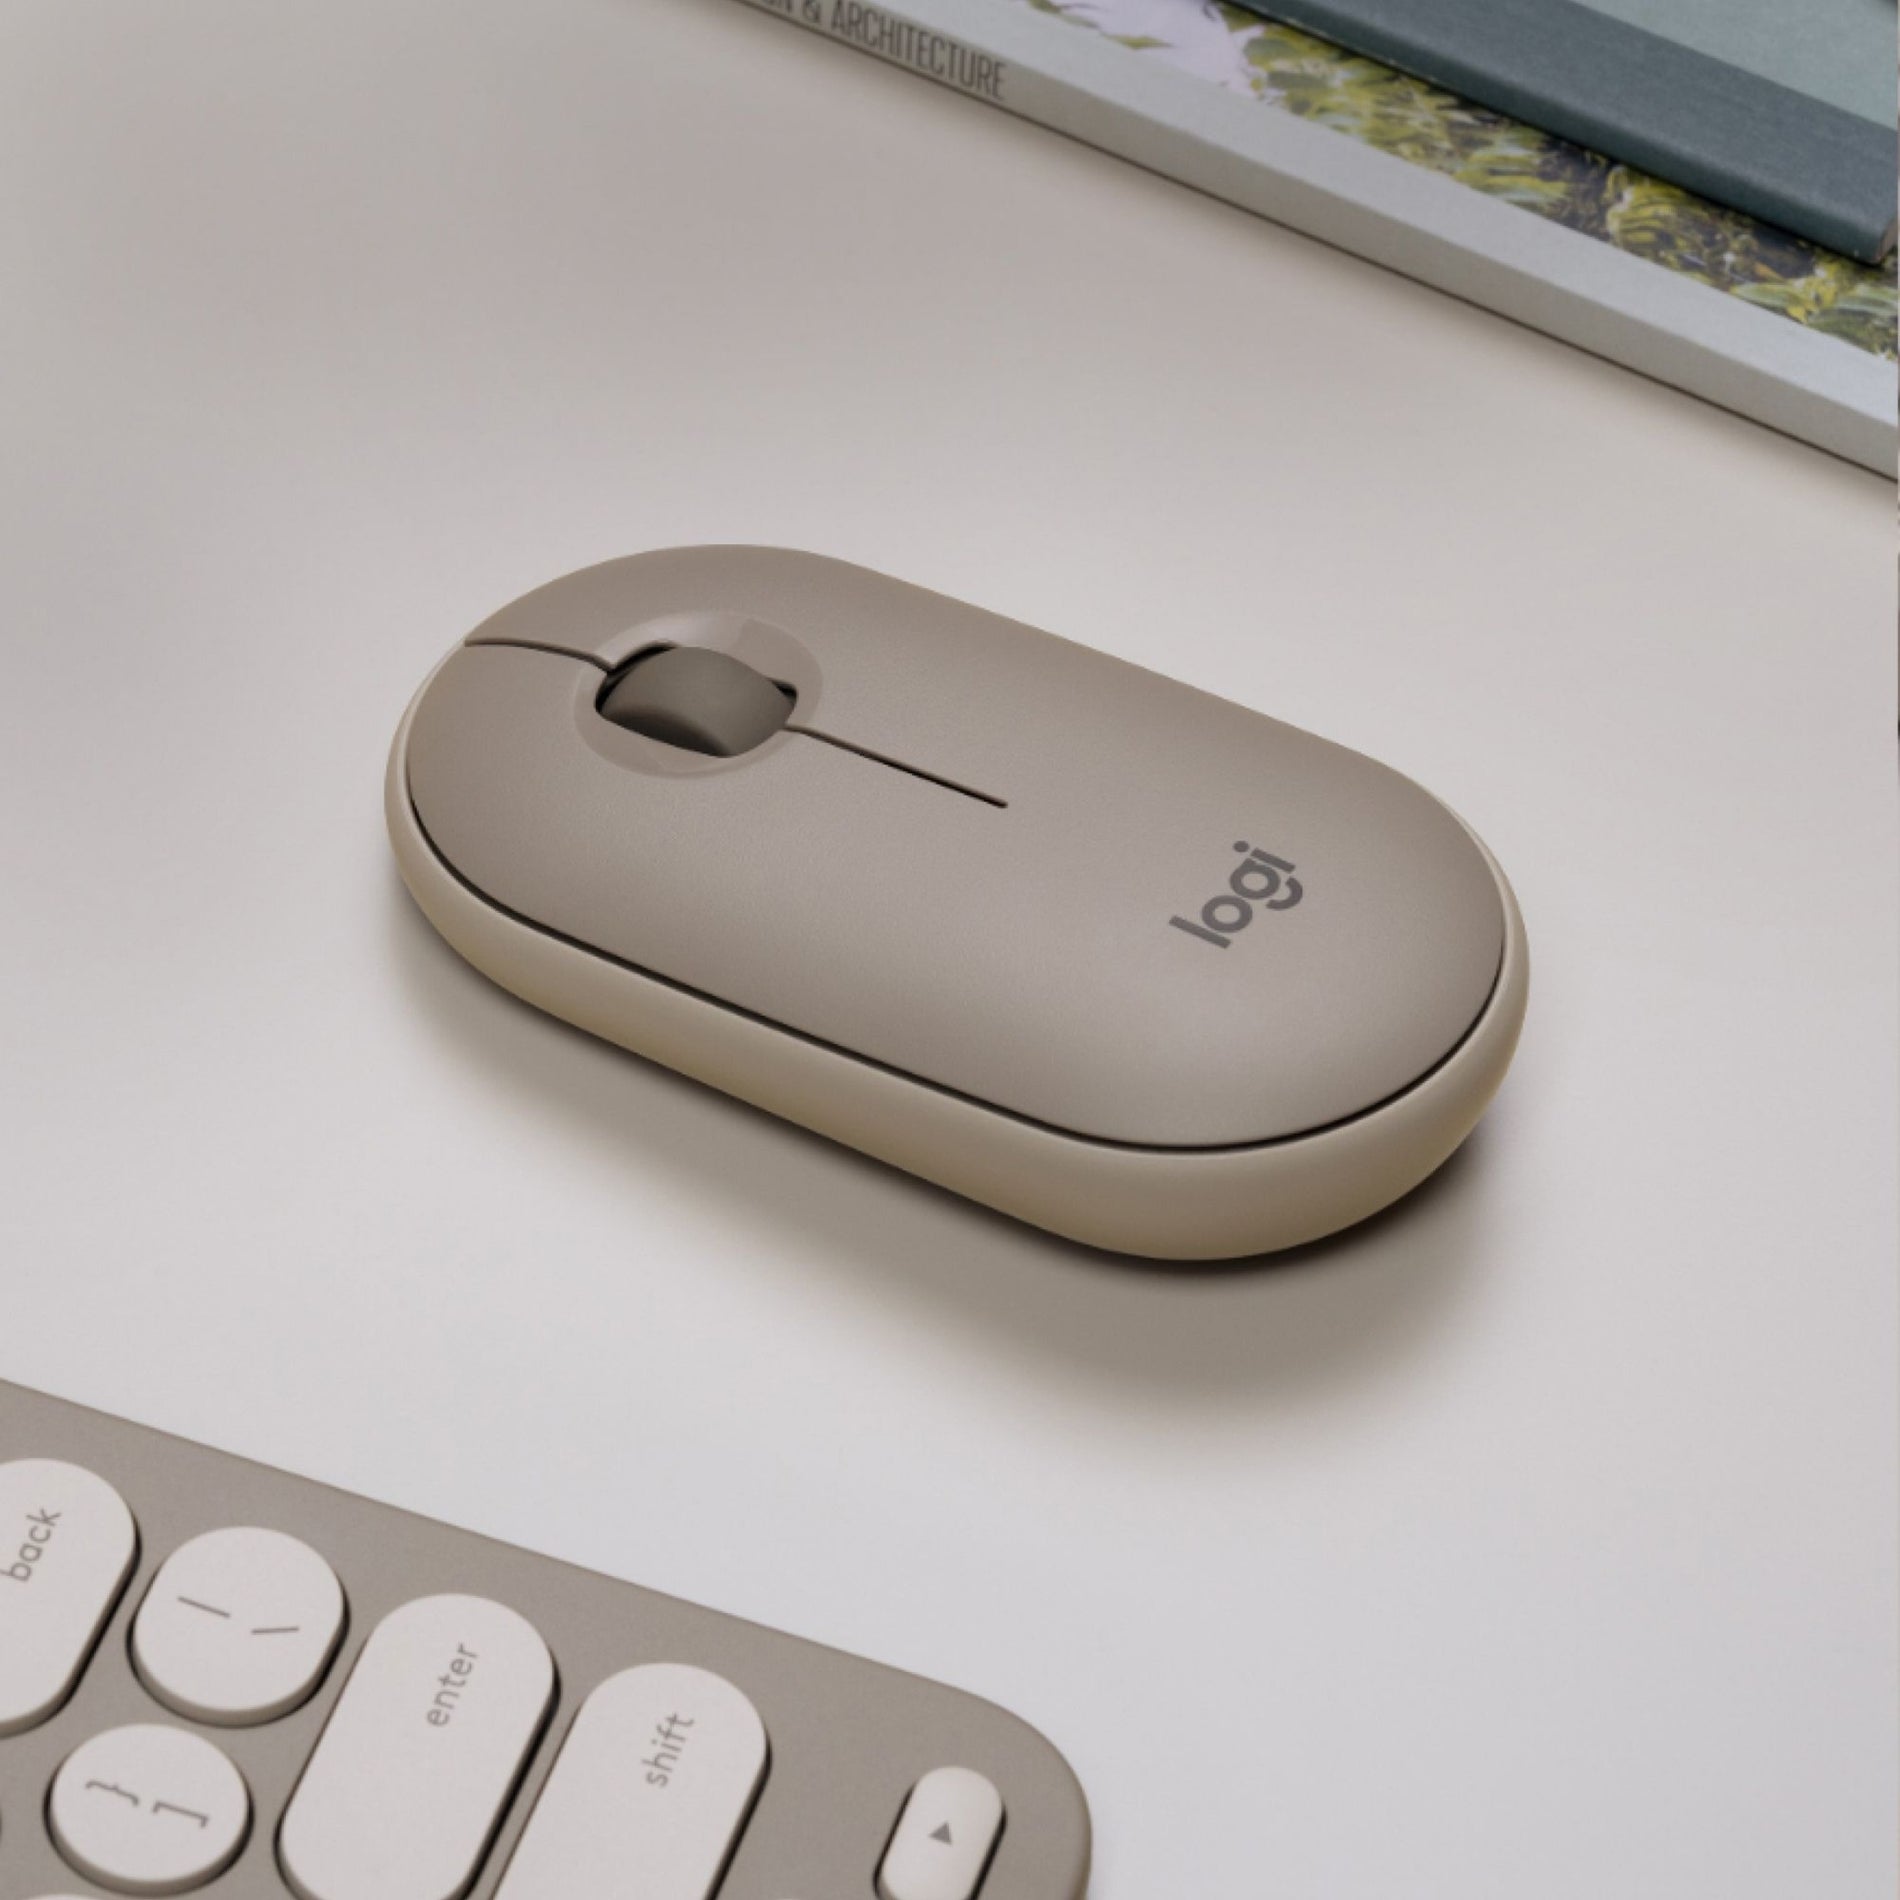 Logitech 910-006658 Pebble M350 Wireless Mouse, Sand, 2.4 GHz, 1000 dpi [Discontinued]